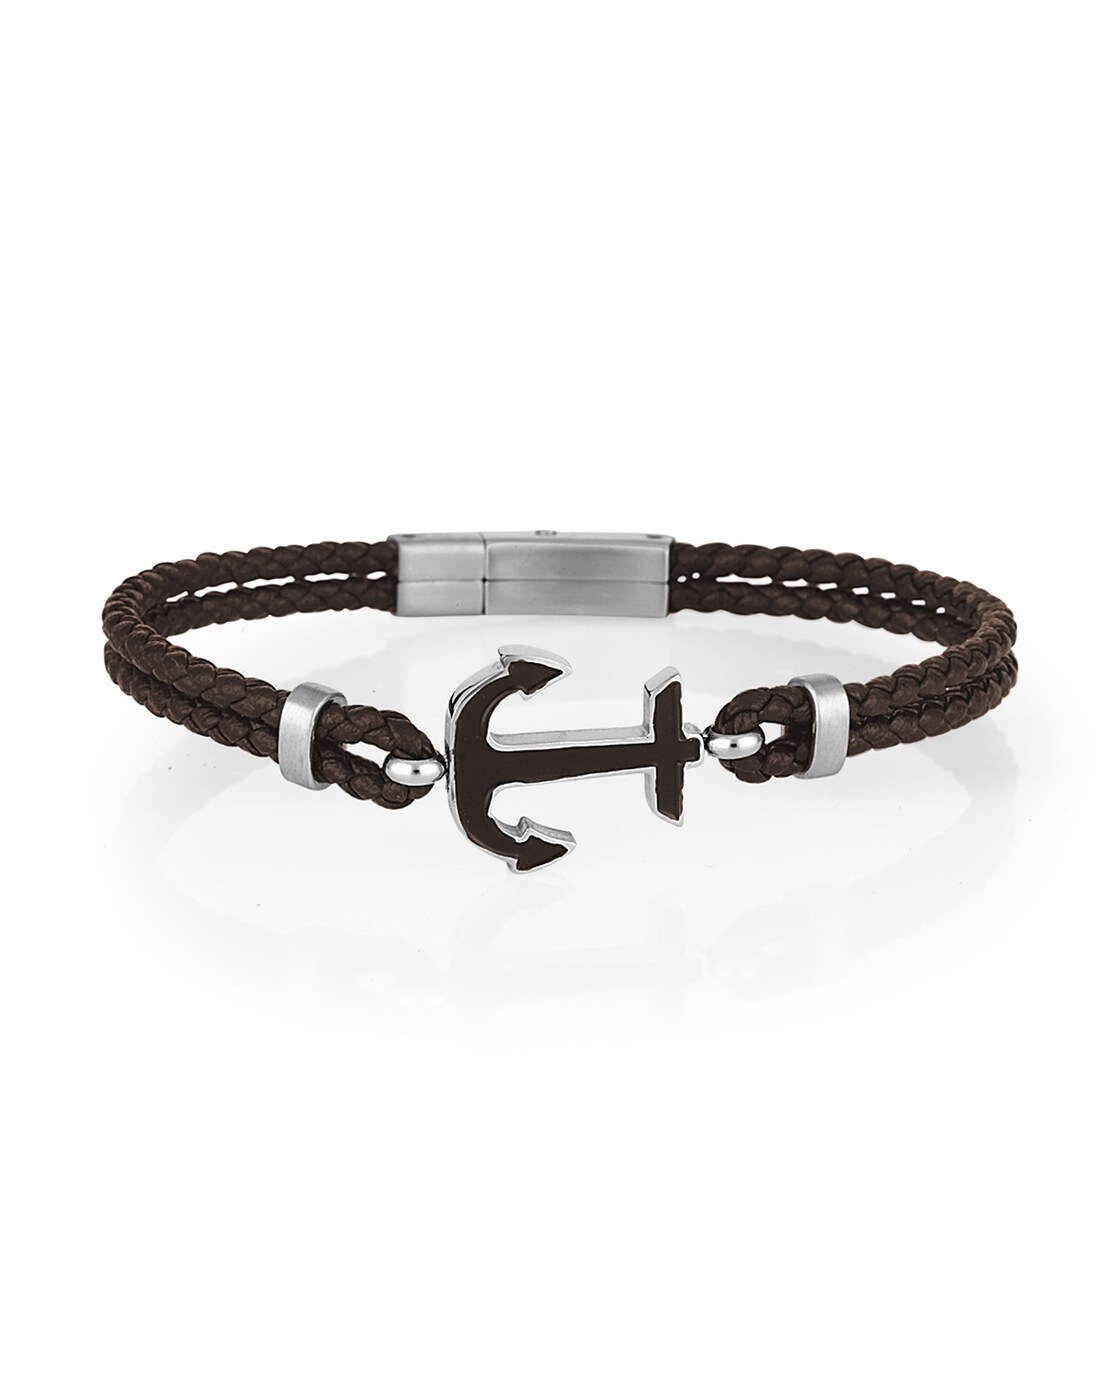 Black Leather Bracelet For Men Anchor Wraparound Charm Bracelet For Men  Boys FFBL071 at Rs 150/piece in Delhi